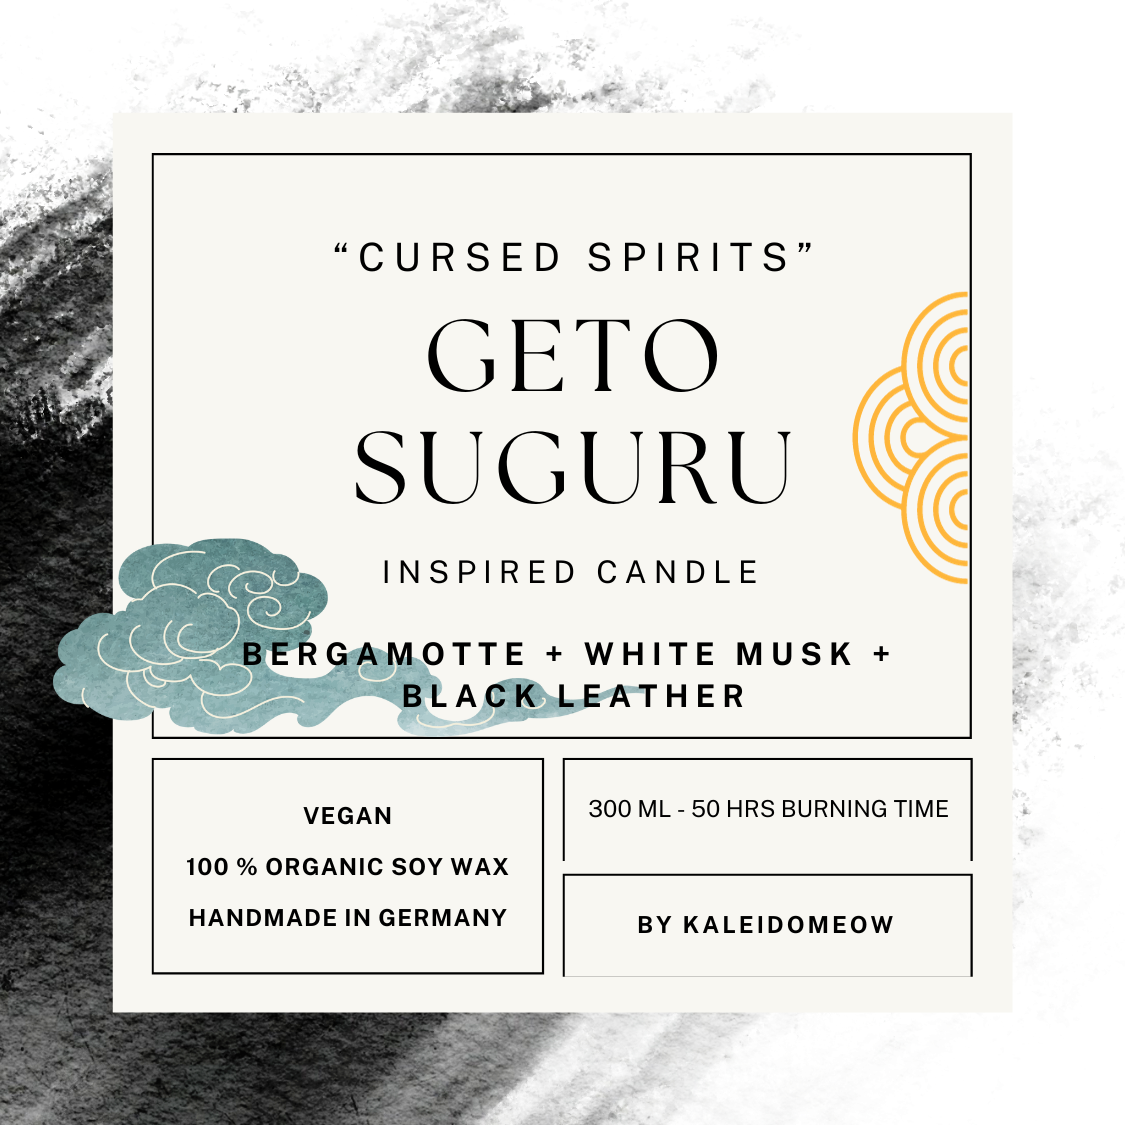 GETO SUGURU inspired candle - 'Cursed Spirits' Jujutsu kaisen inspired soy Candle 300 ML